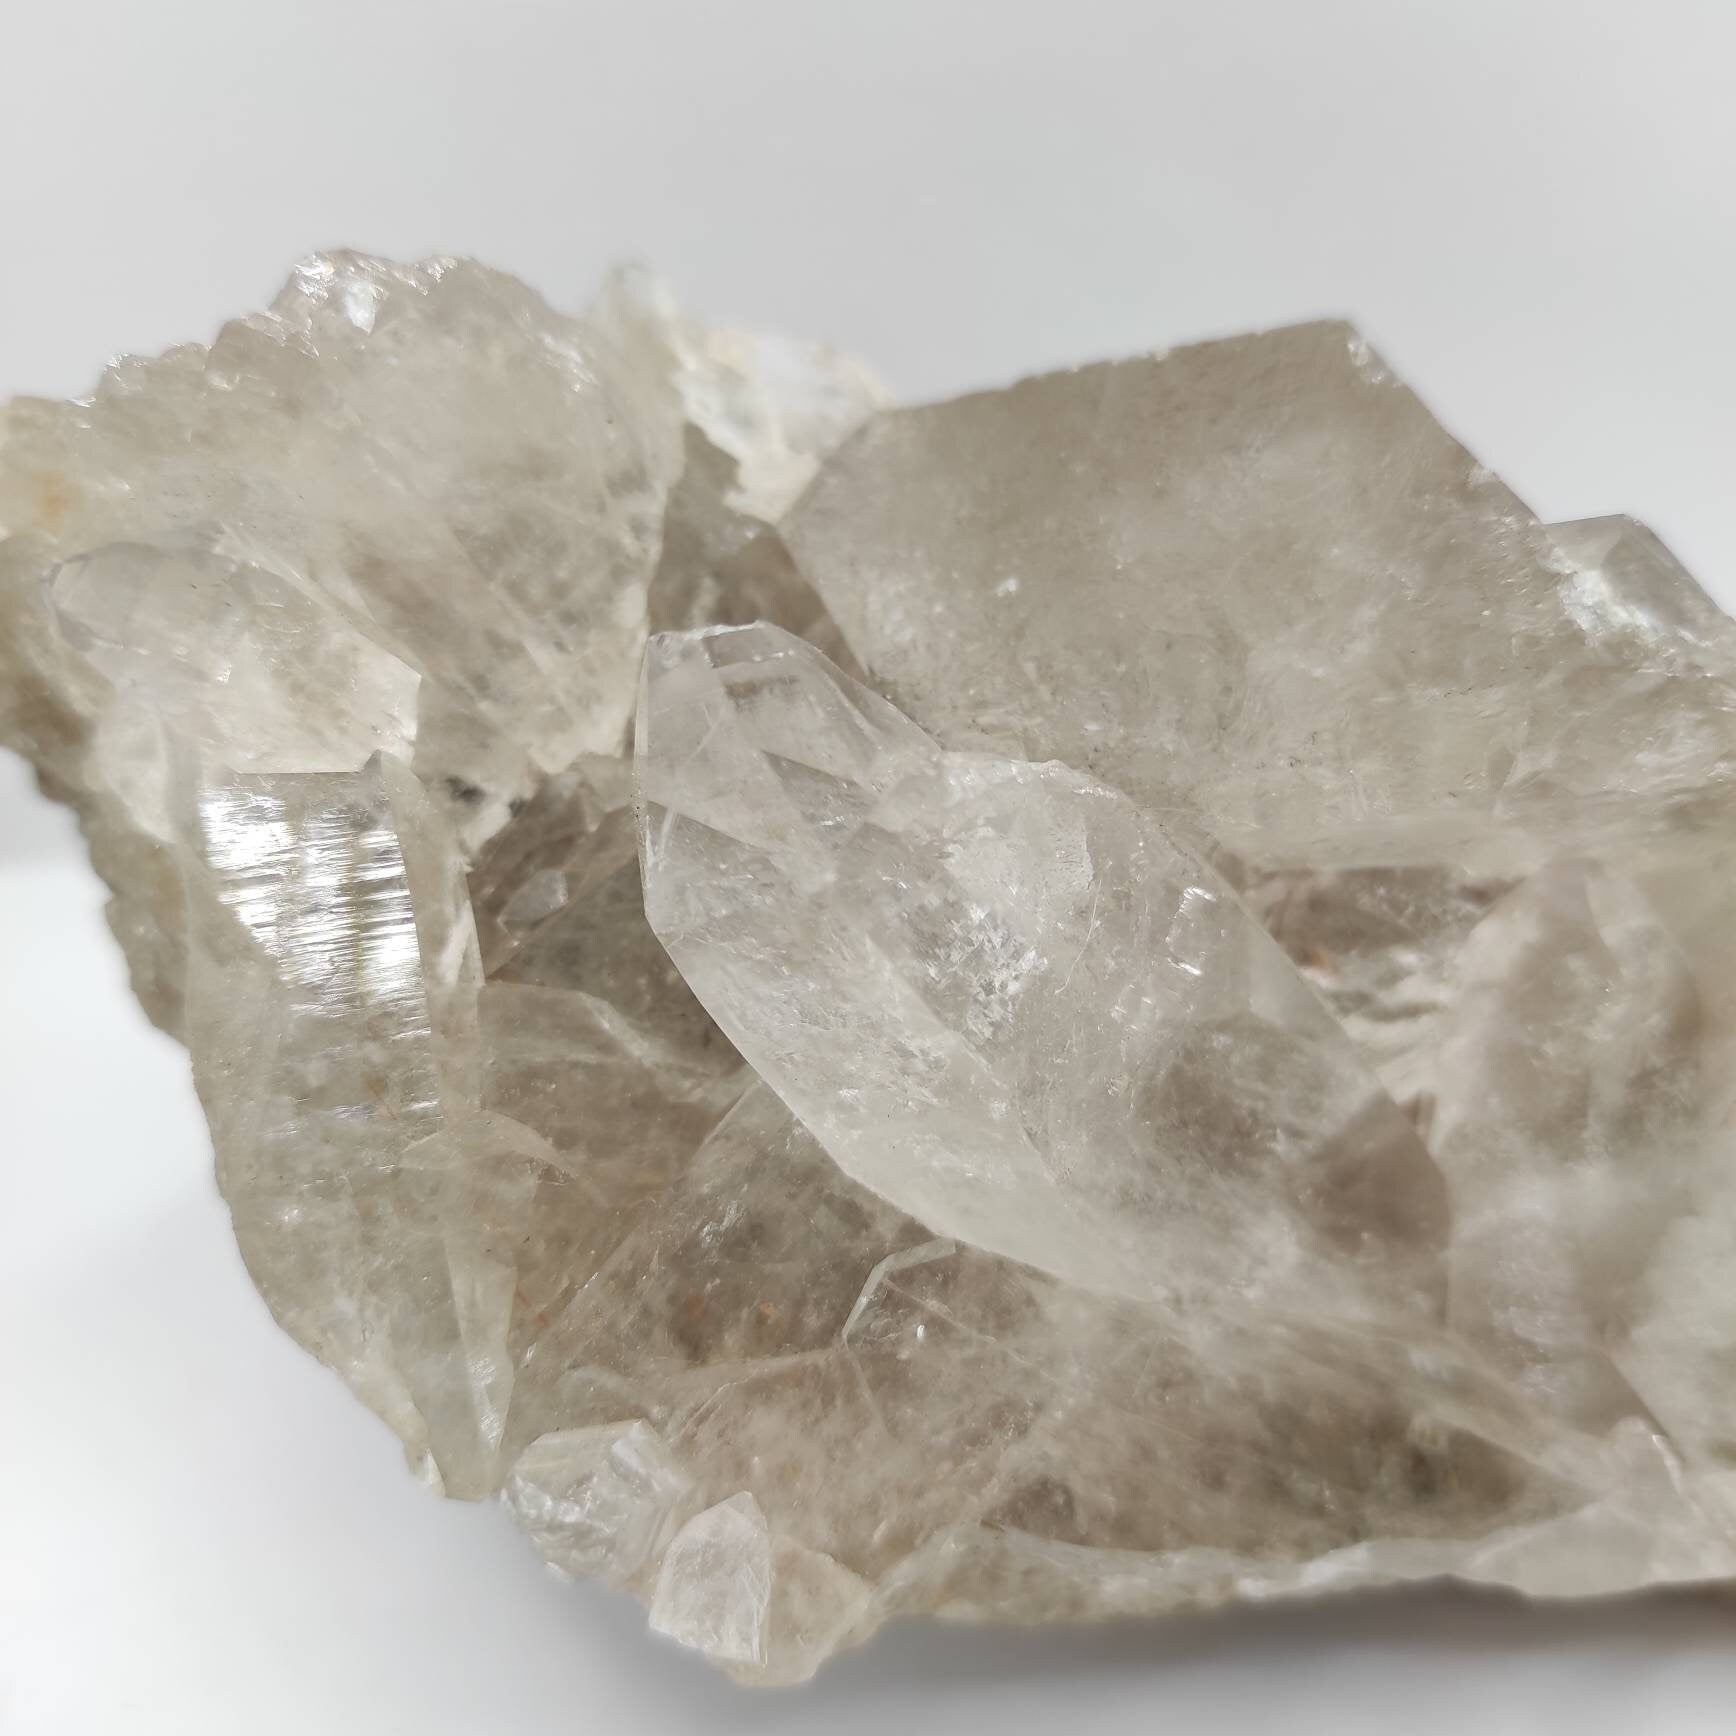 1.15kg Smoky Quartz Crystal Specimen - Quartz Mineral Cluster - Large Quartz Crystal - Natural Untreated Quartz from Rio do Sul, Brazil